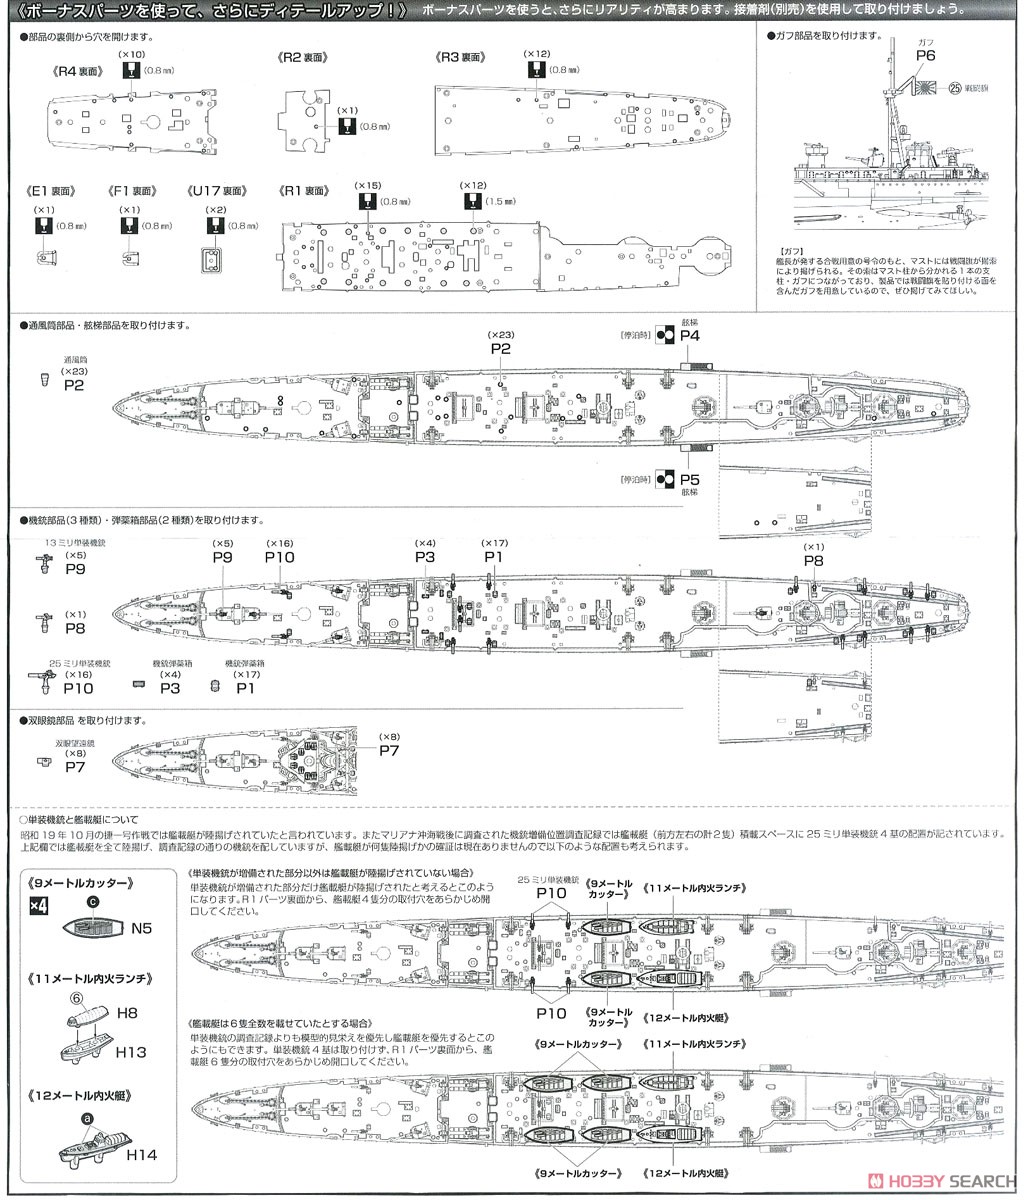 日本海軍軽巡洋艦 多摩 昭和19年/捷一号作戦 (プラモデル) 設計図5